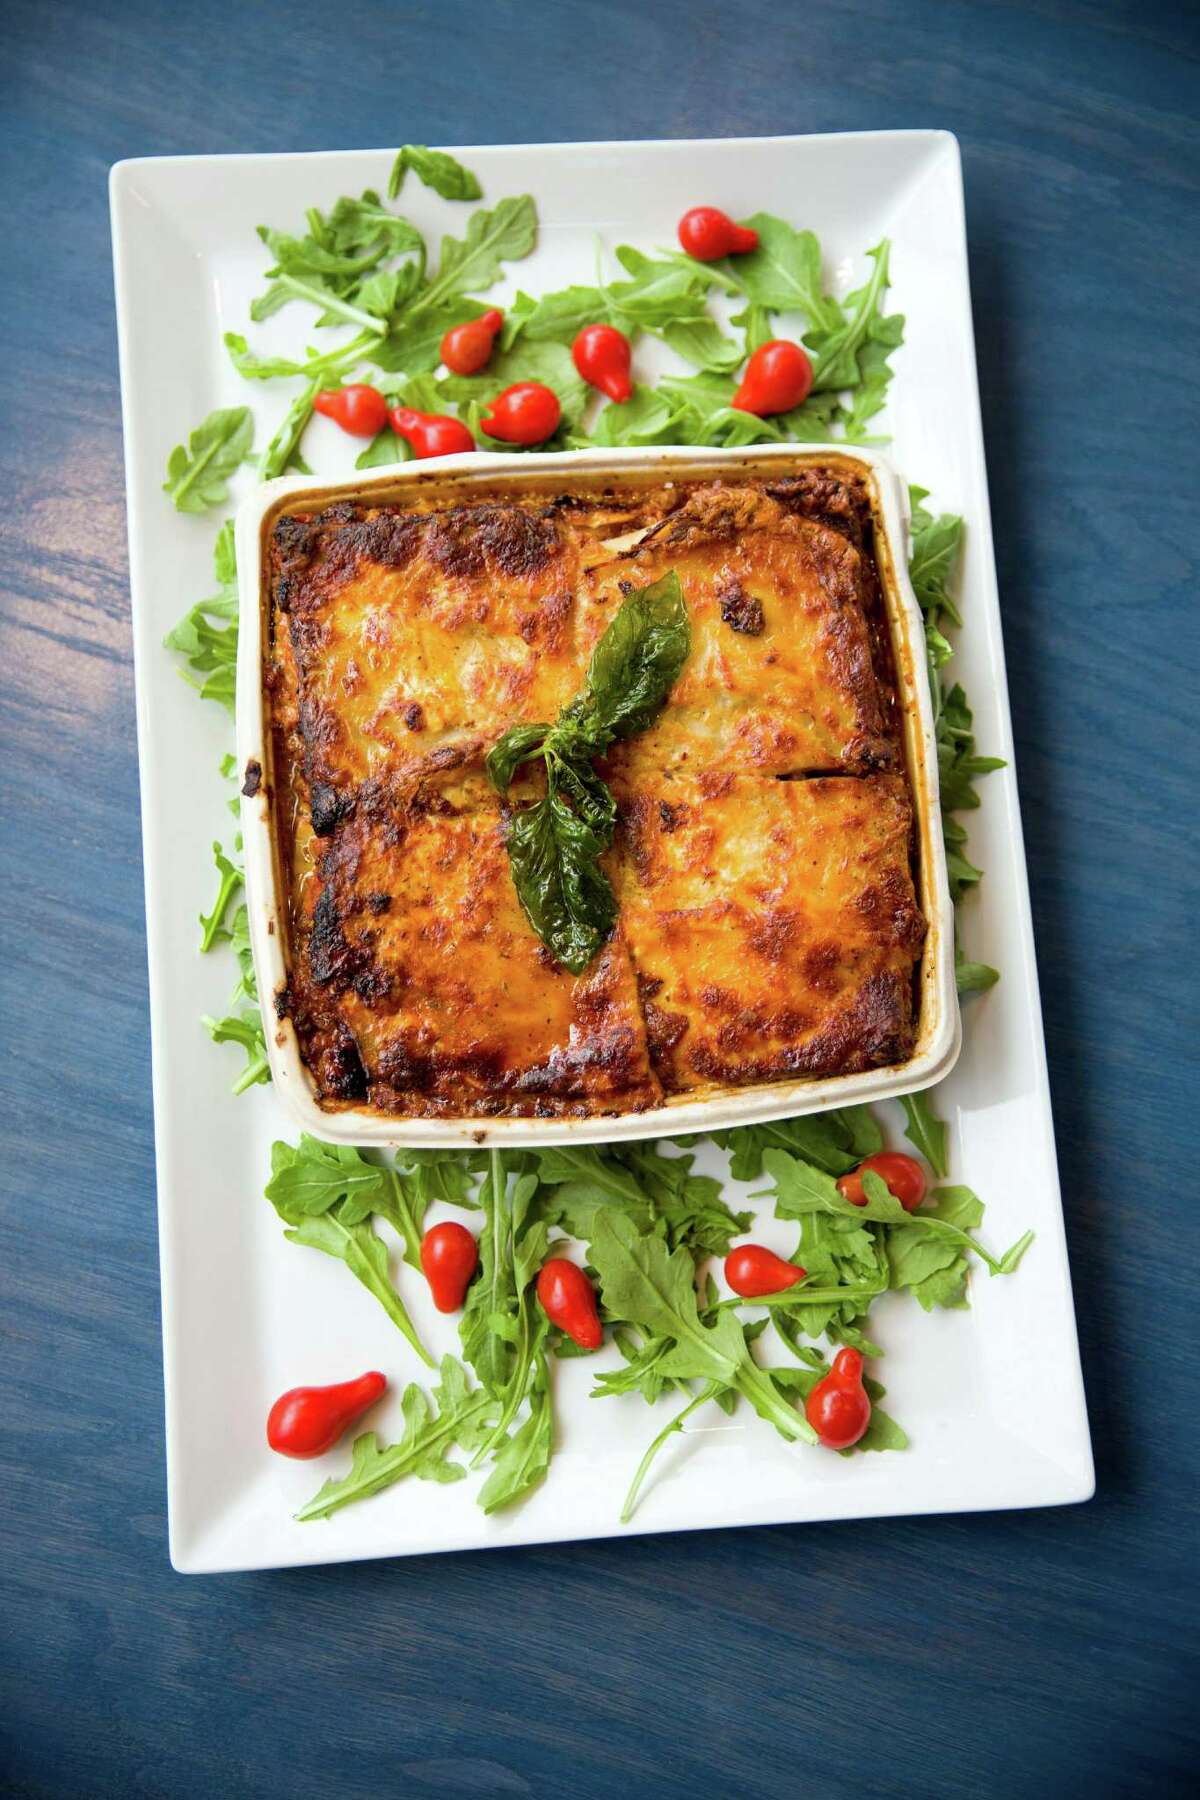 Don’t feel like cooking at home? Grab a good lasagna at Cafe Dijon and heat it up at home.